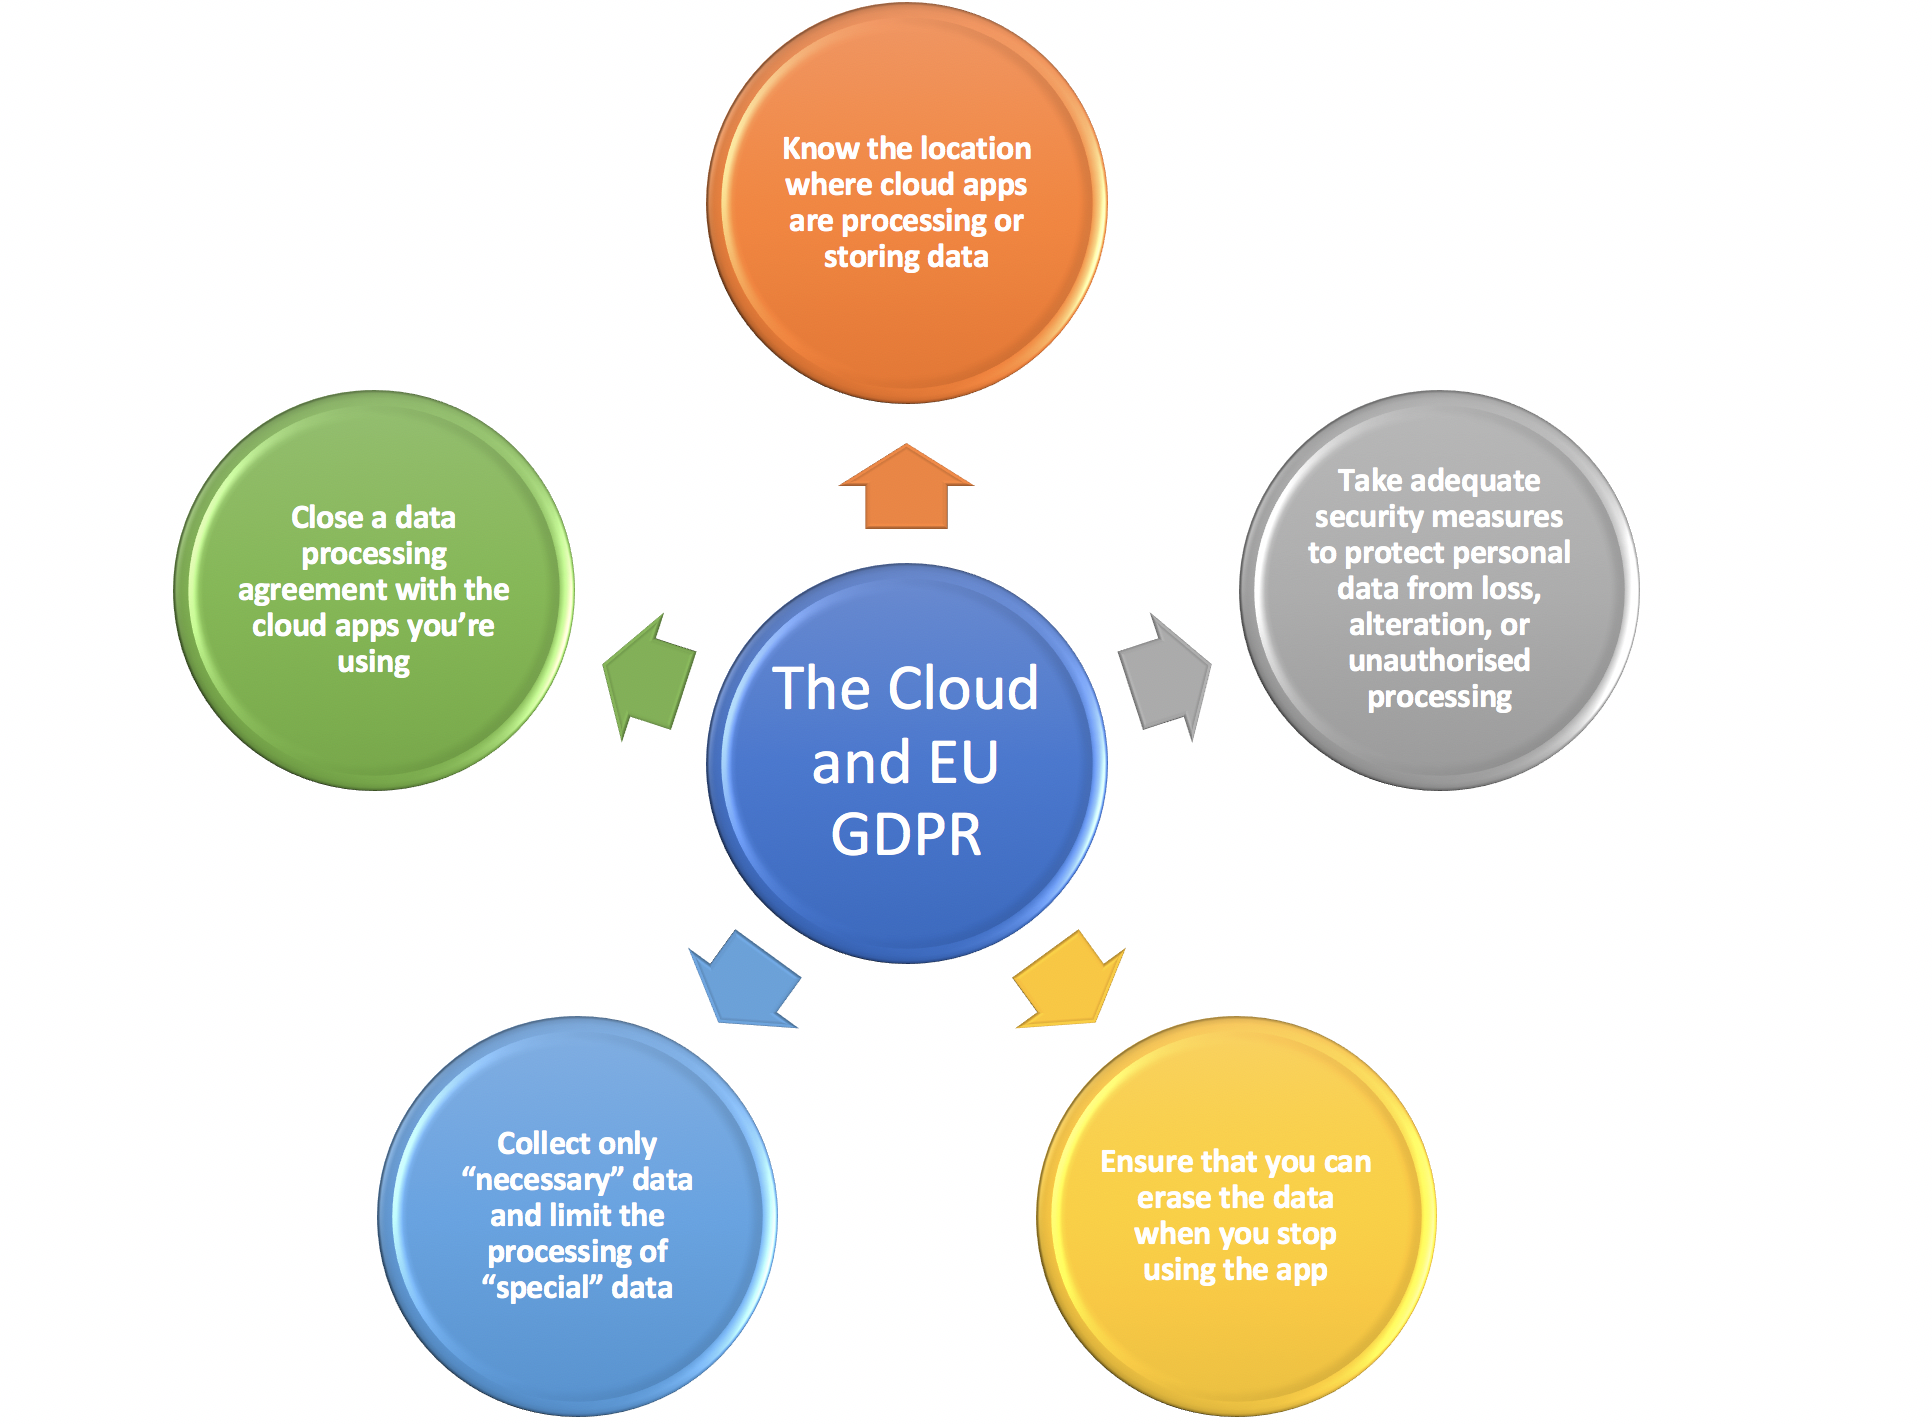 The Cloud and EU GDPR